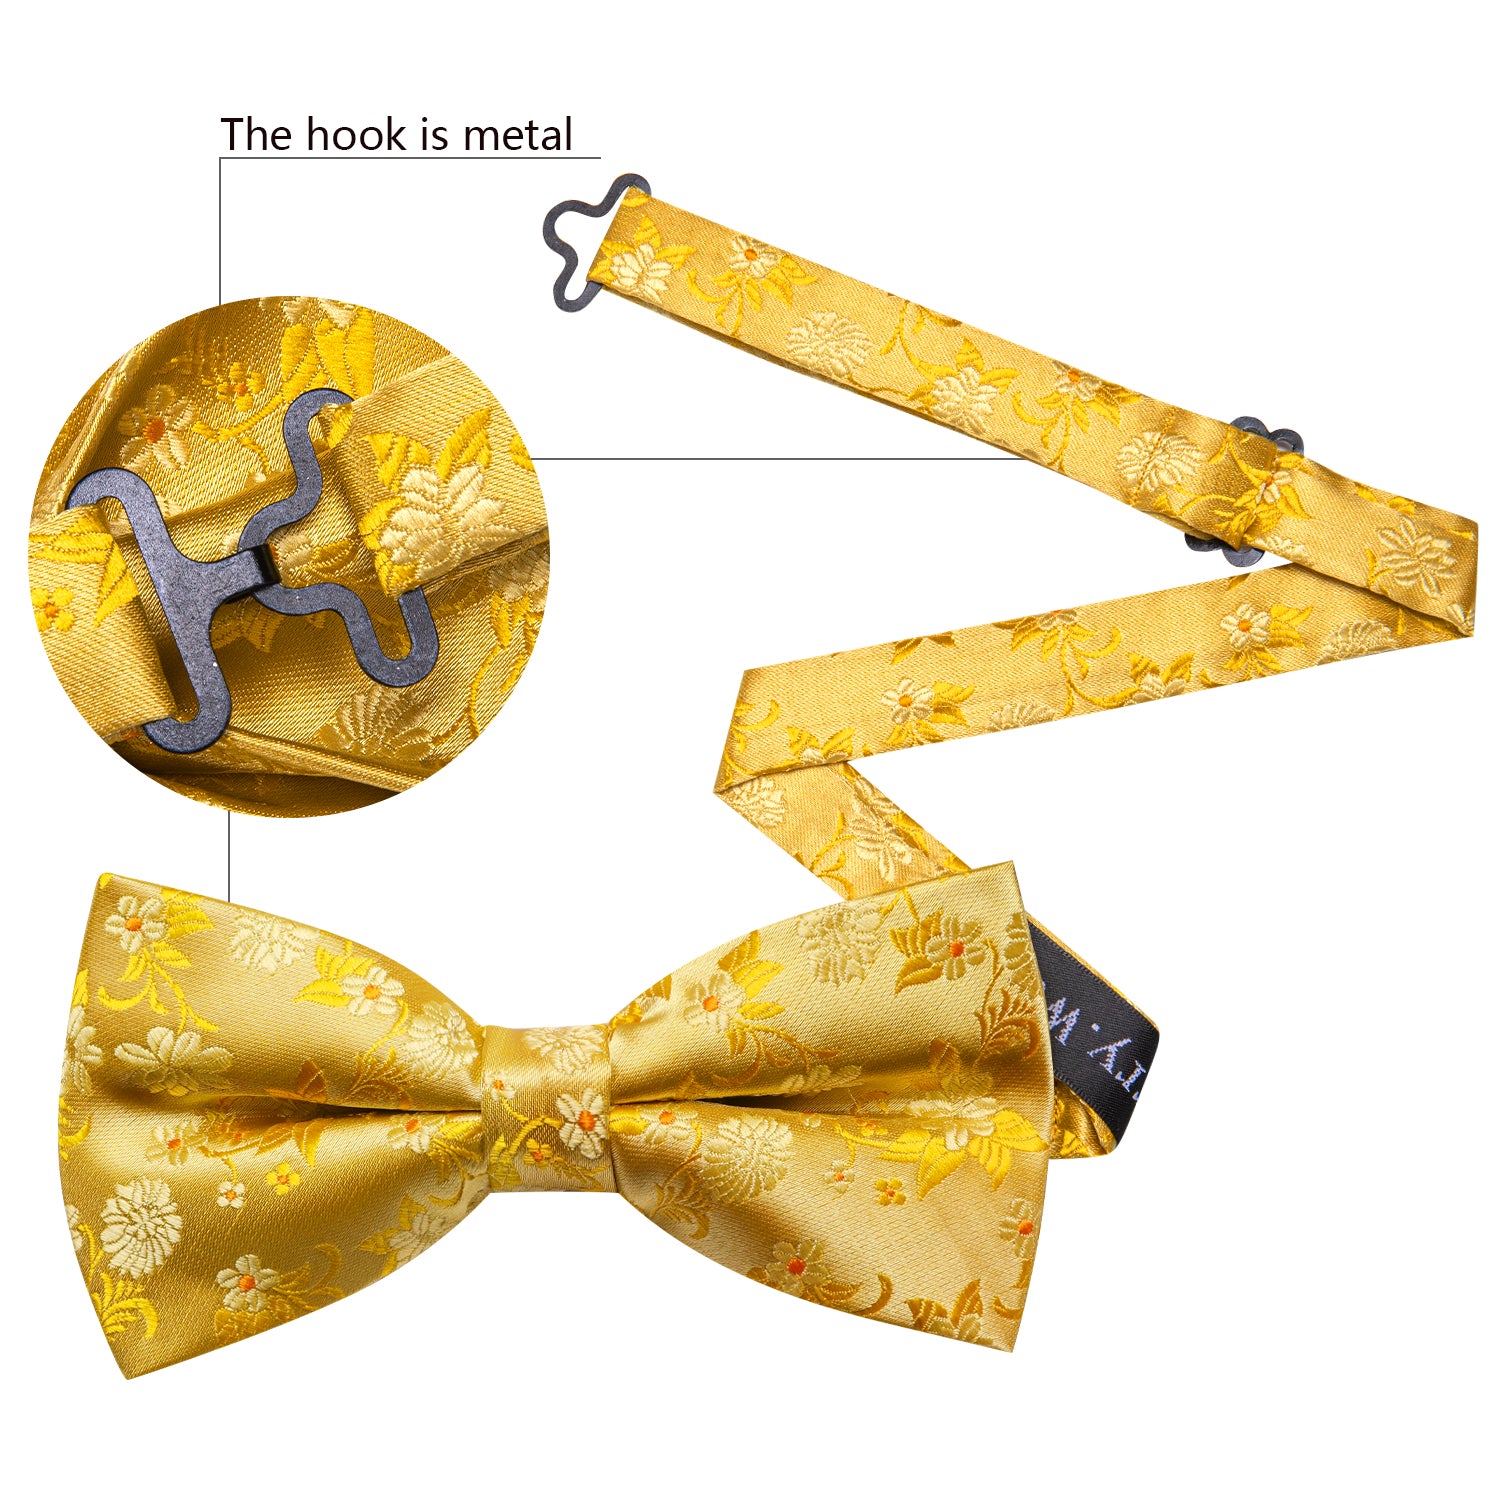 Gold Floral Pre-tied Bow Tie Hanky Cufflinks Set